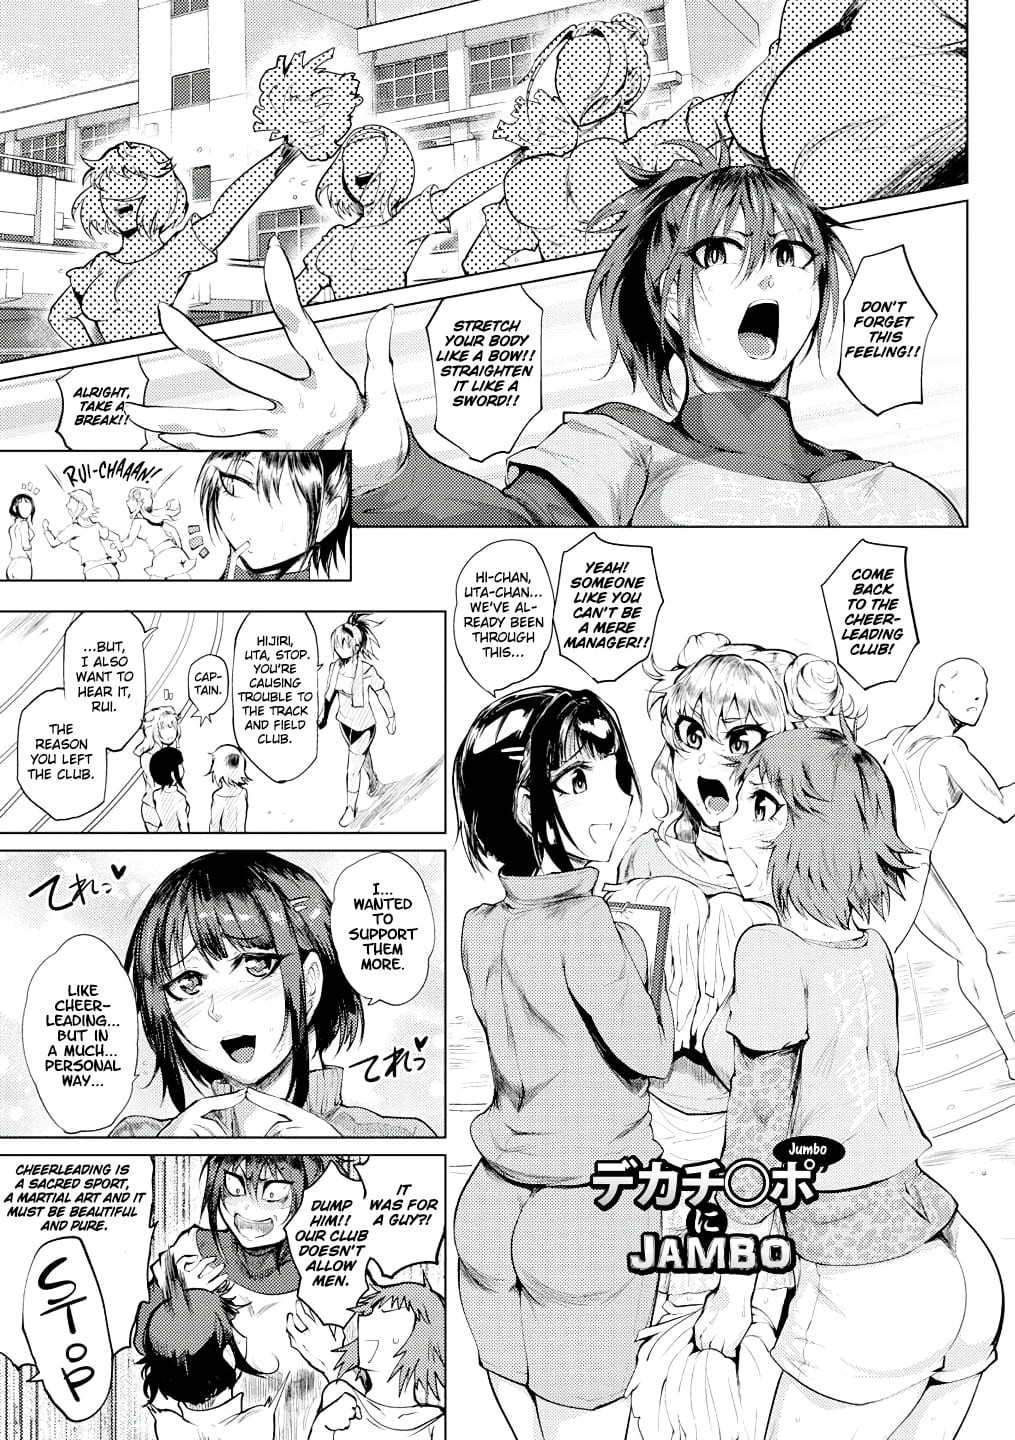 Hentai Manga Comic-JAMBO With Big Cocks-Read-1